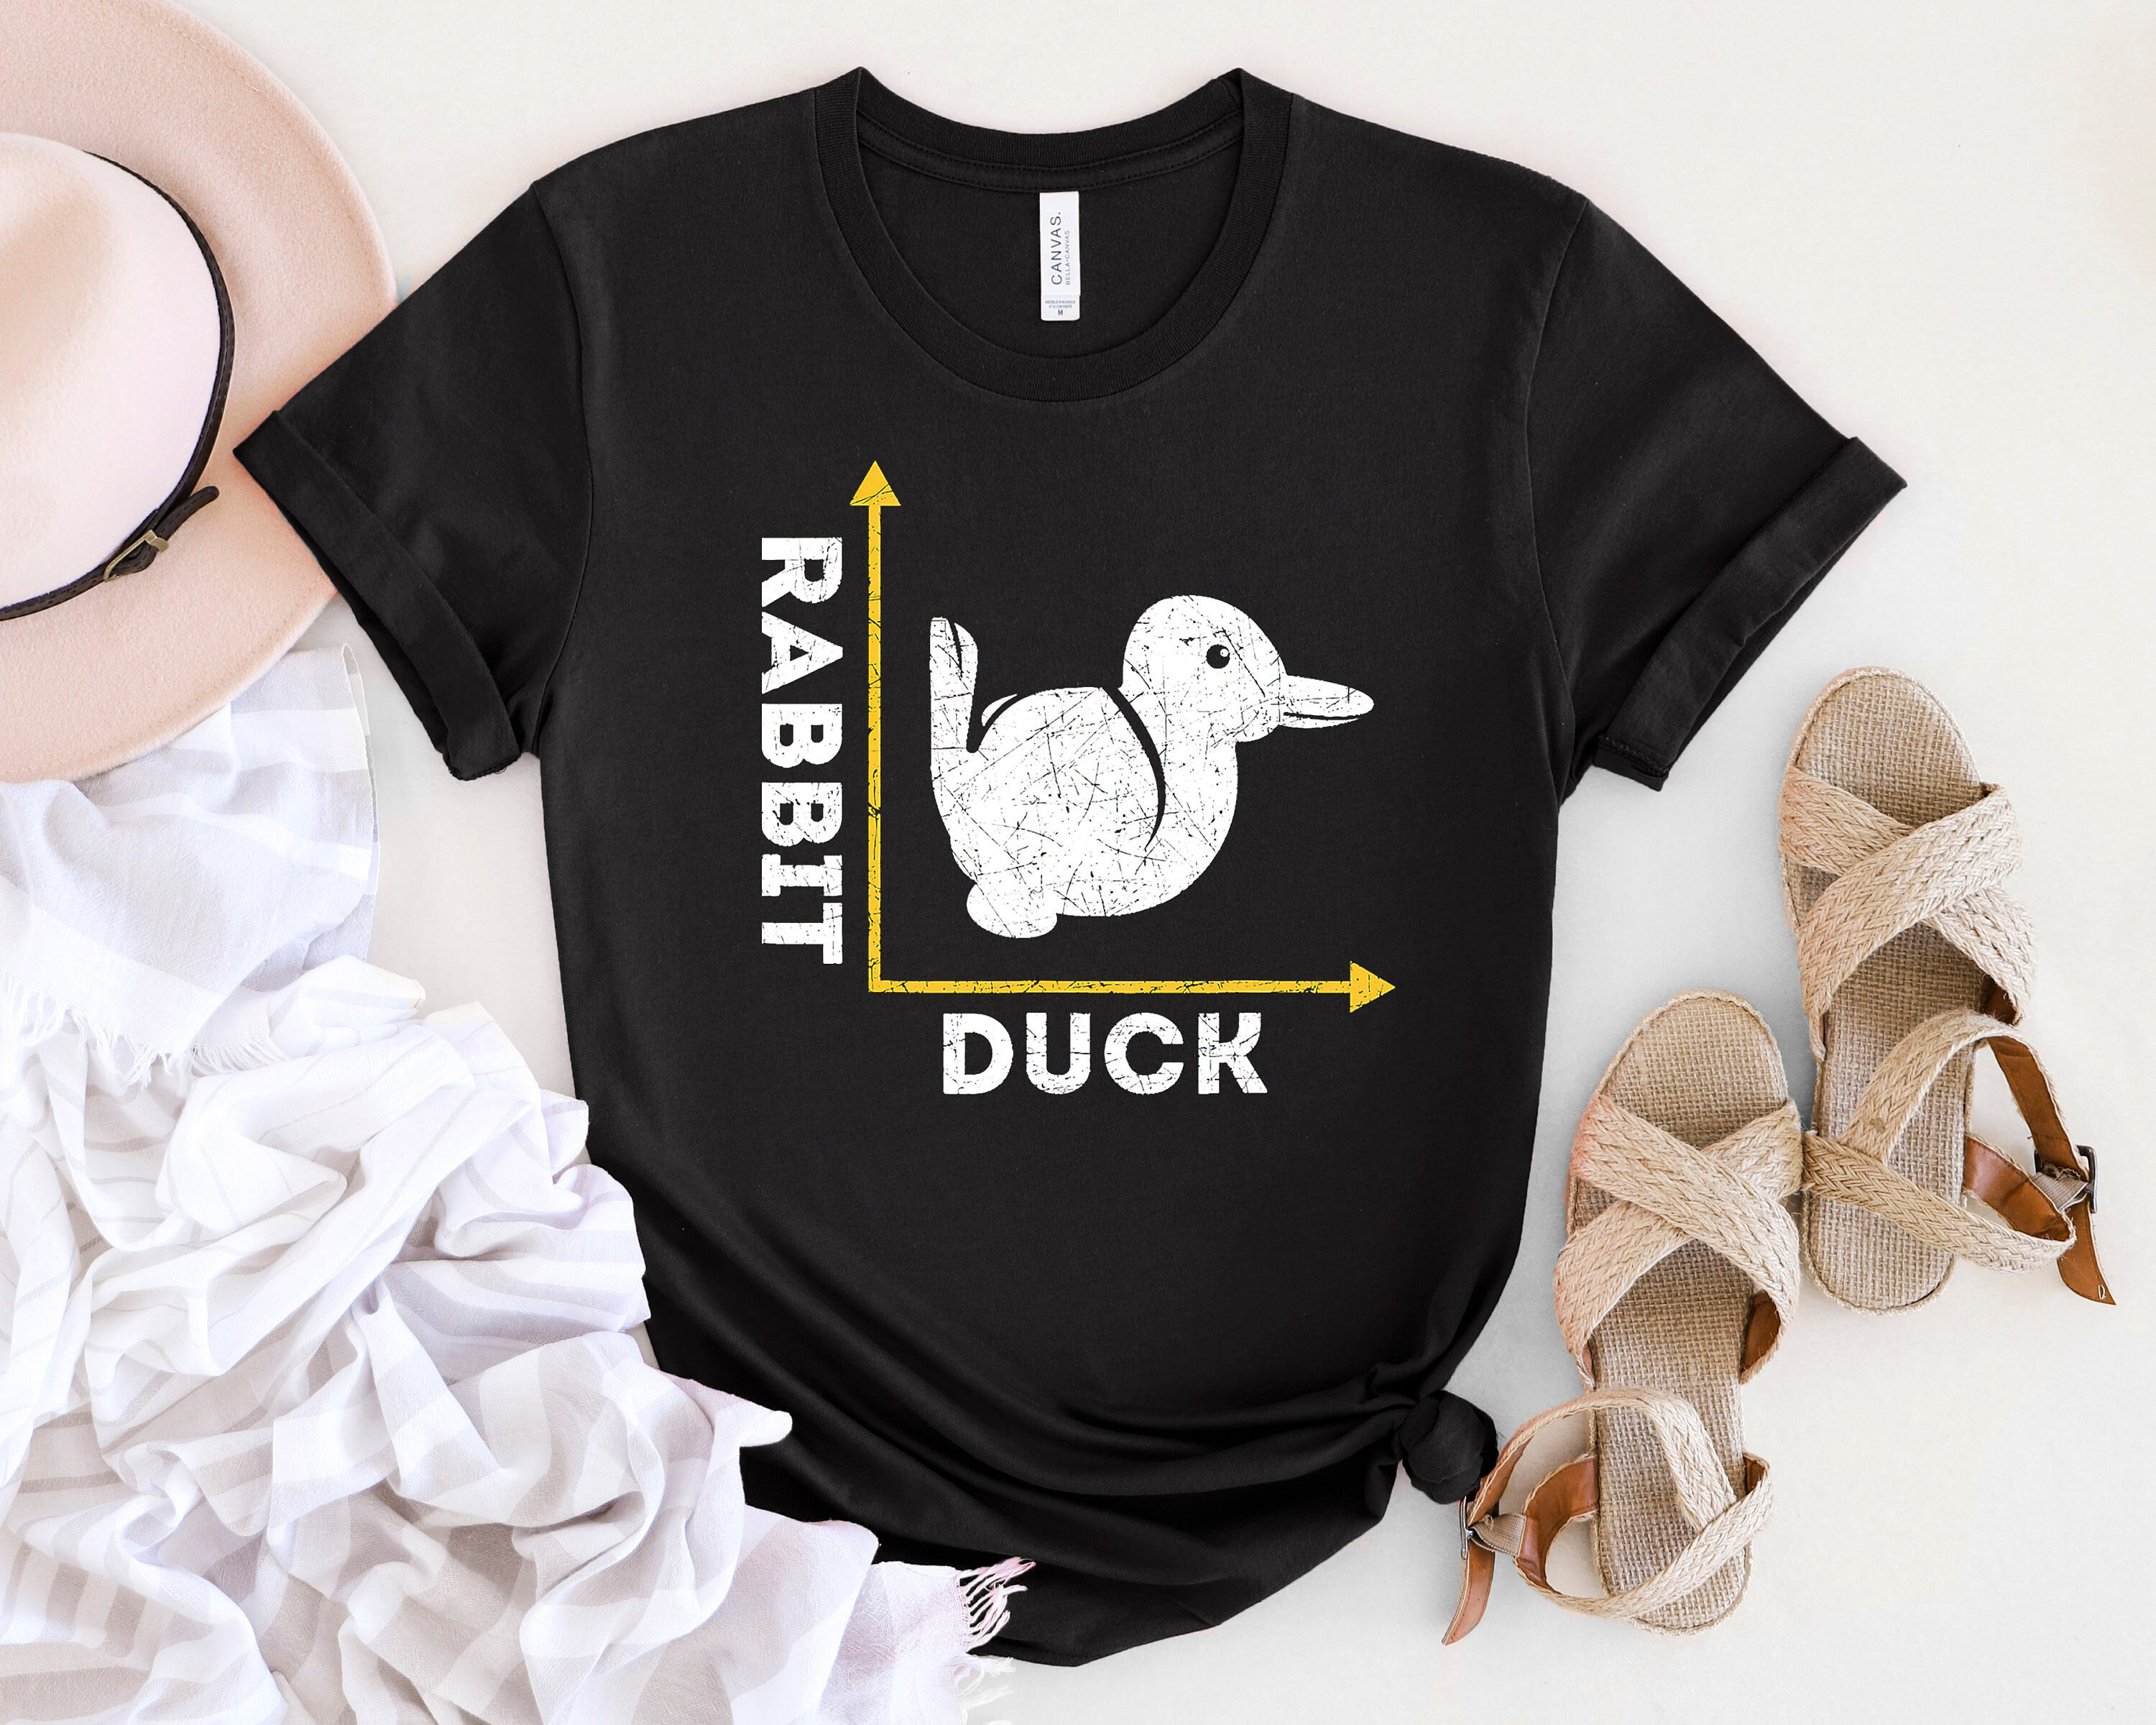 Duck Or Rabbit T-Shirt, Funny Animal Lover Gift